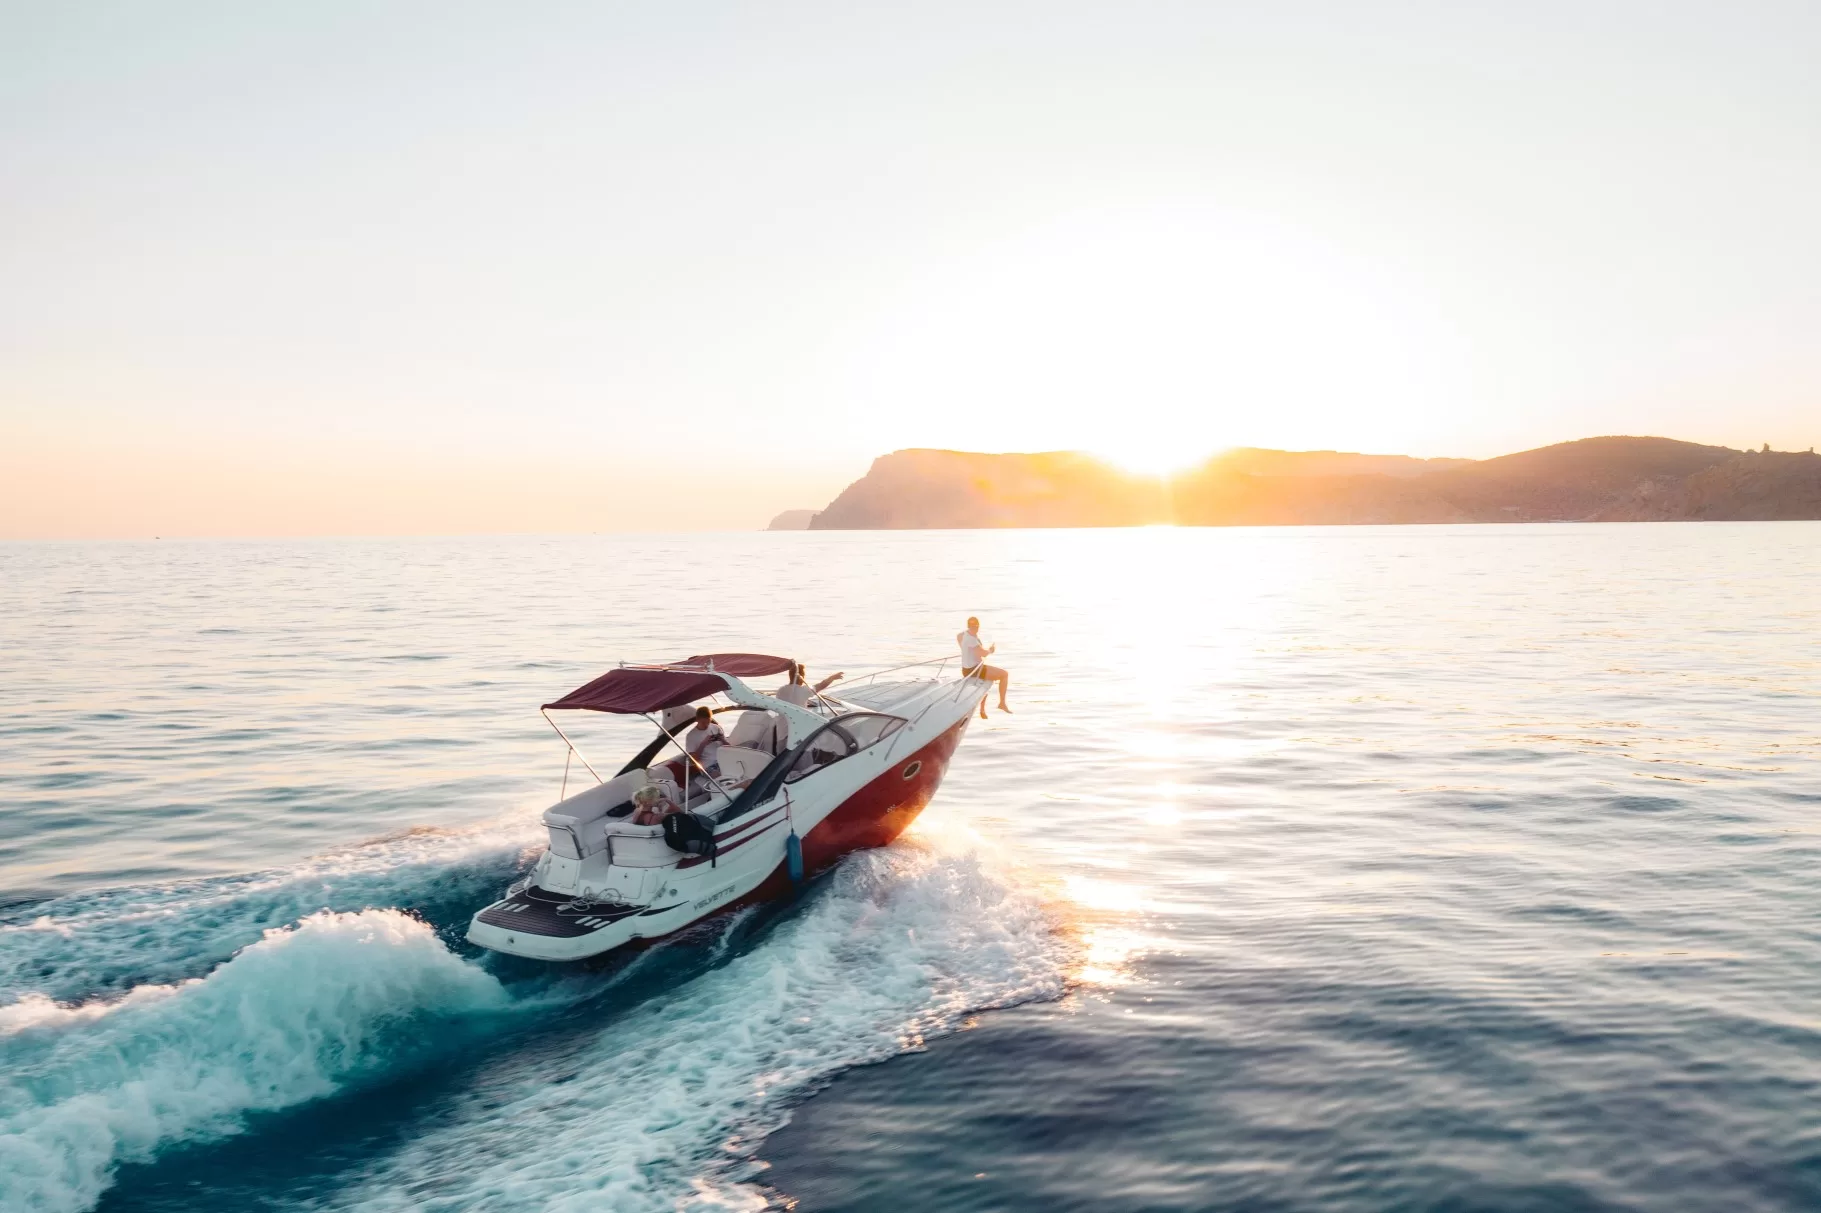 BoatHoist-Blog-Boat-In-Water-Sunset-Ivan-Ragozin-Unsplash